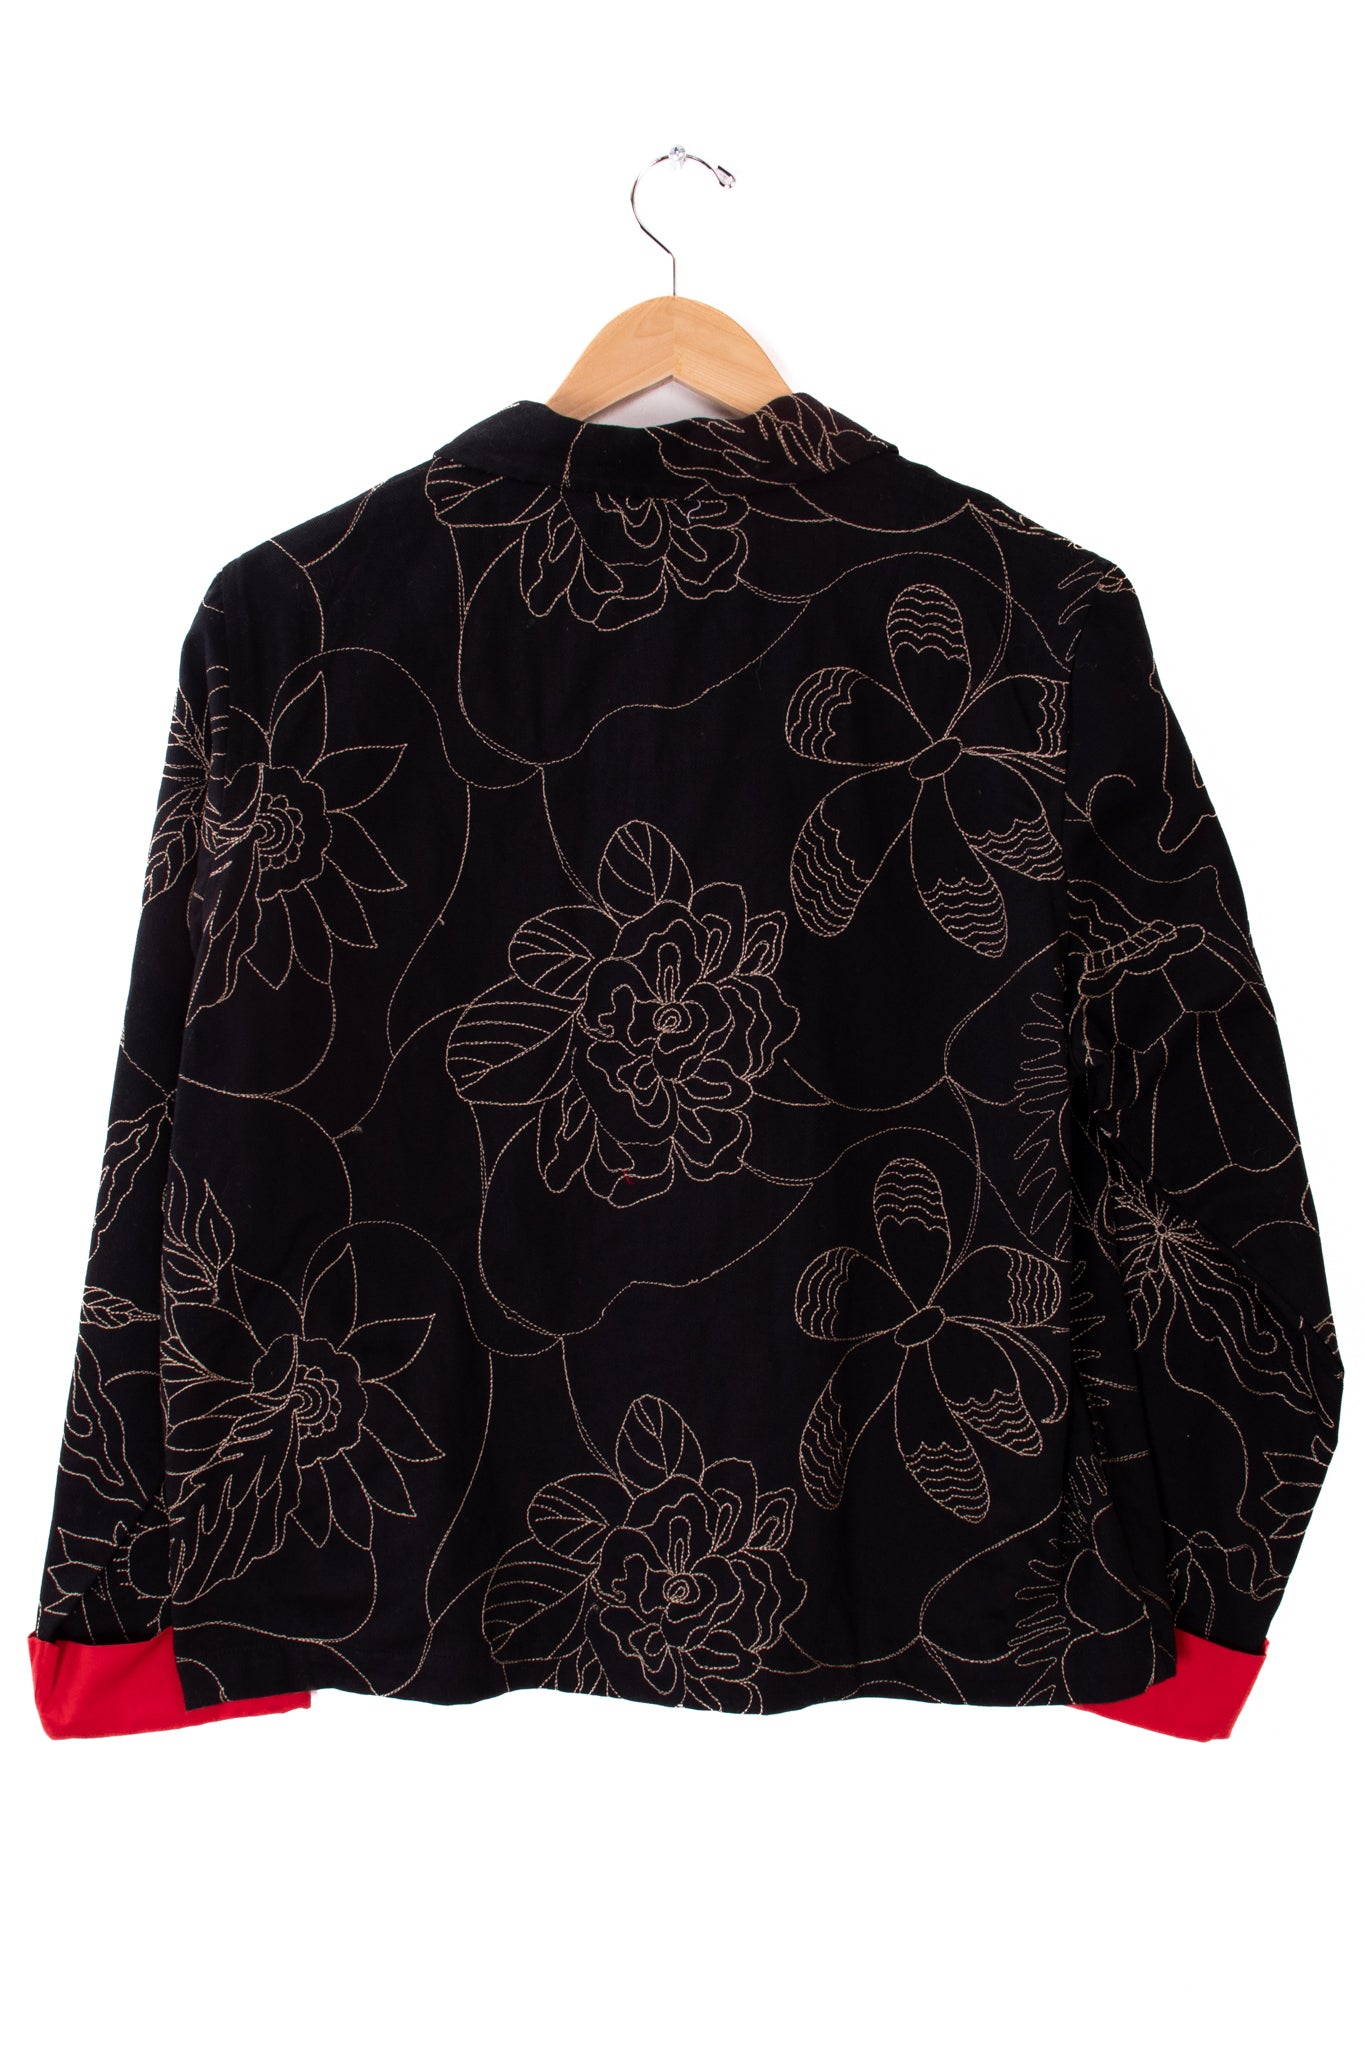 Classic Elements Black Floral Embroidered Denim Jacket